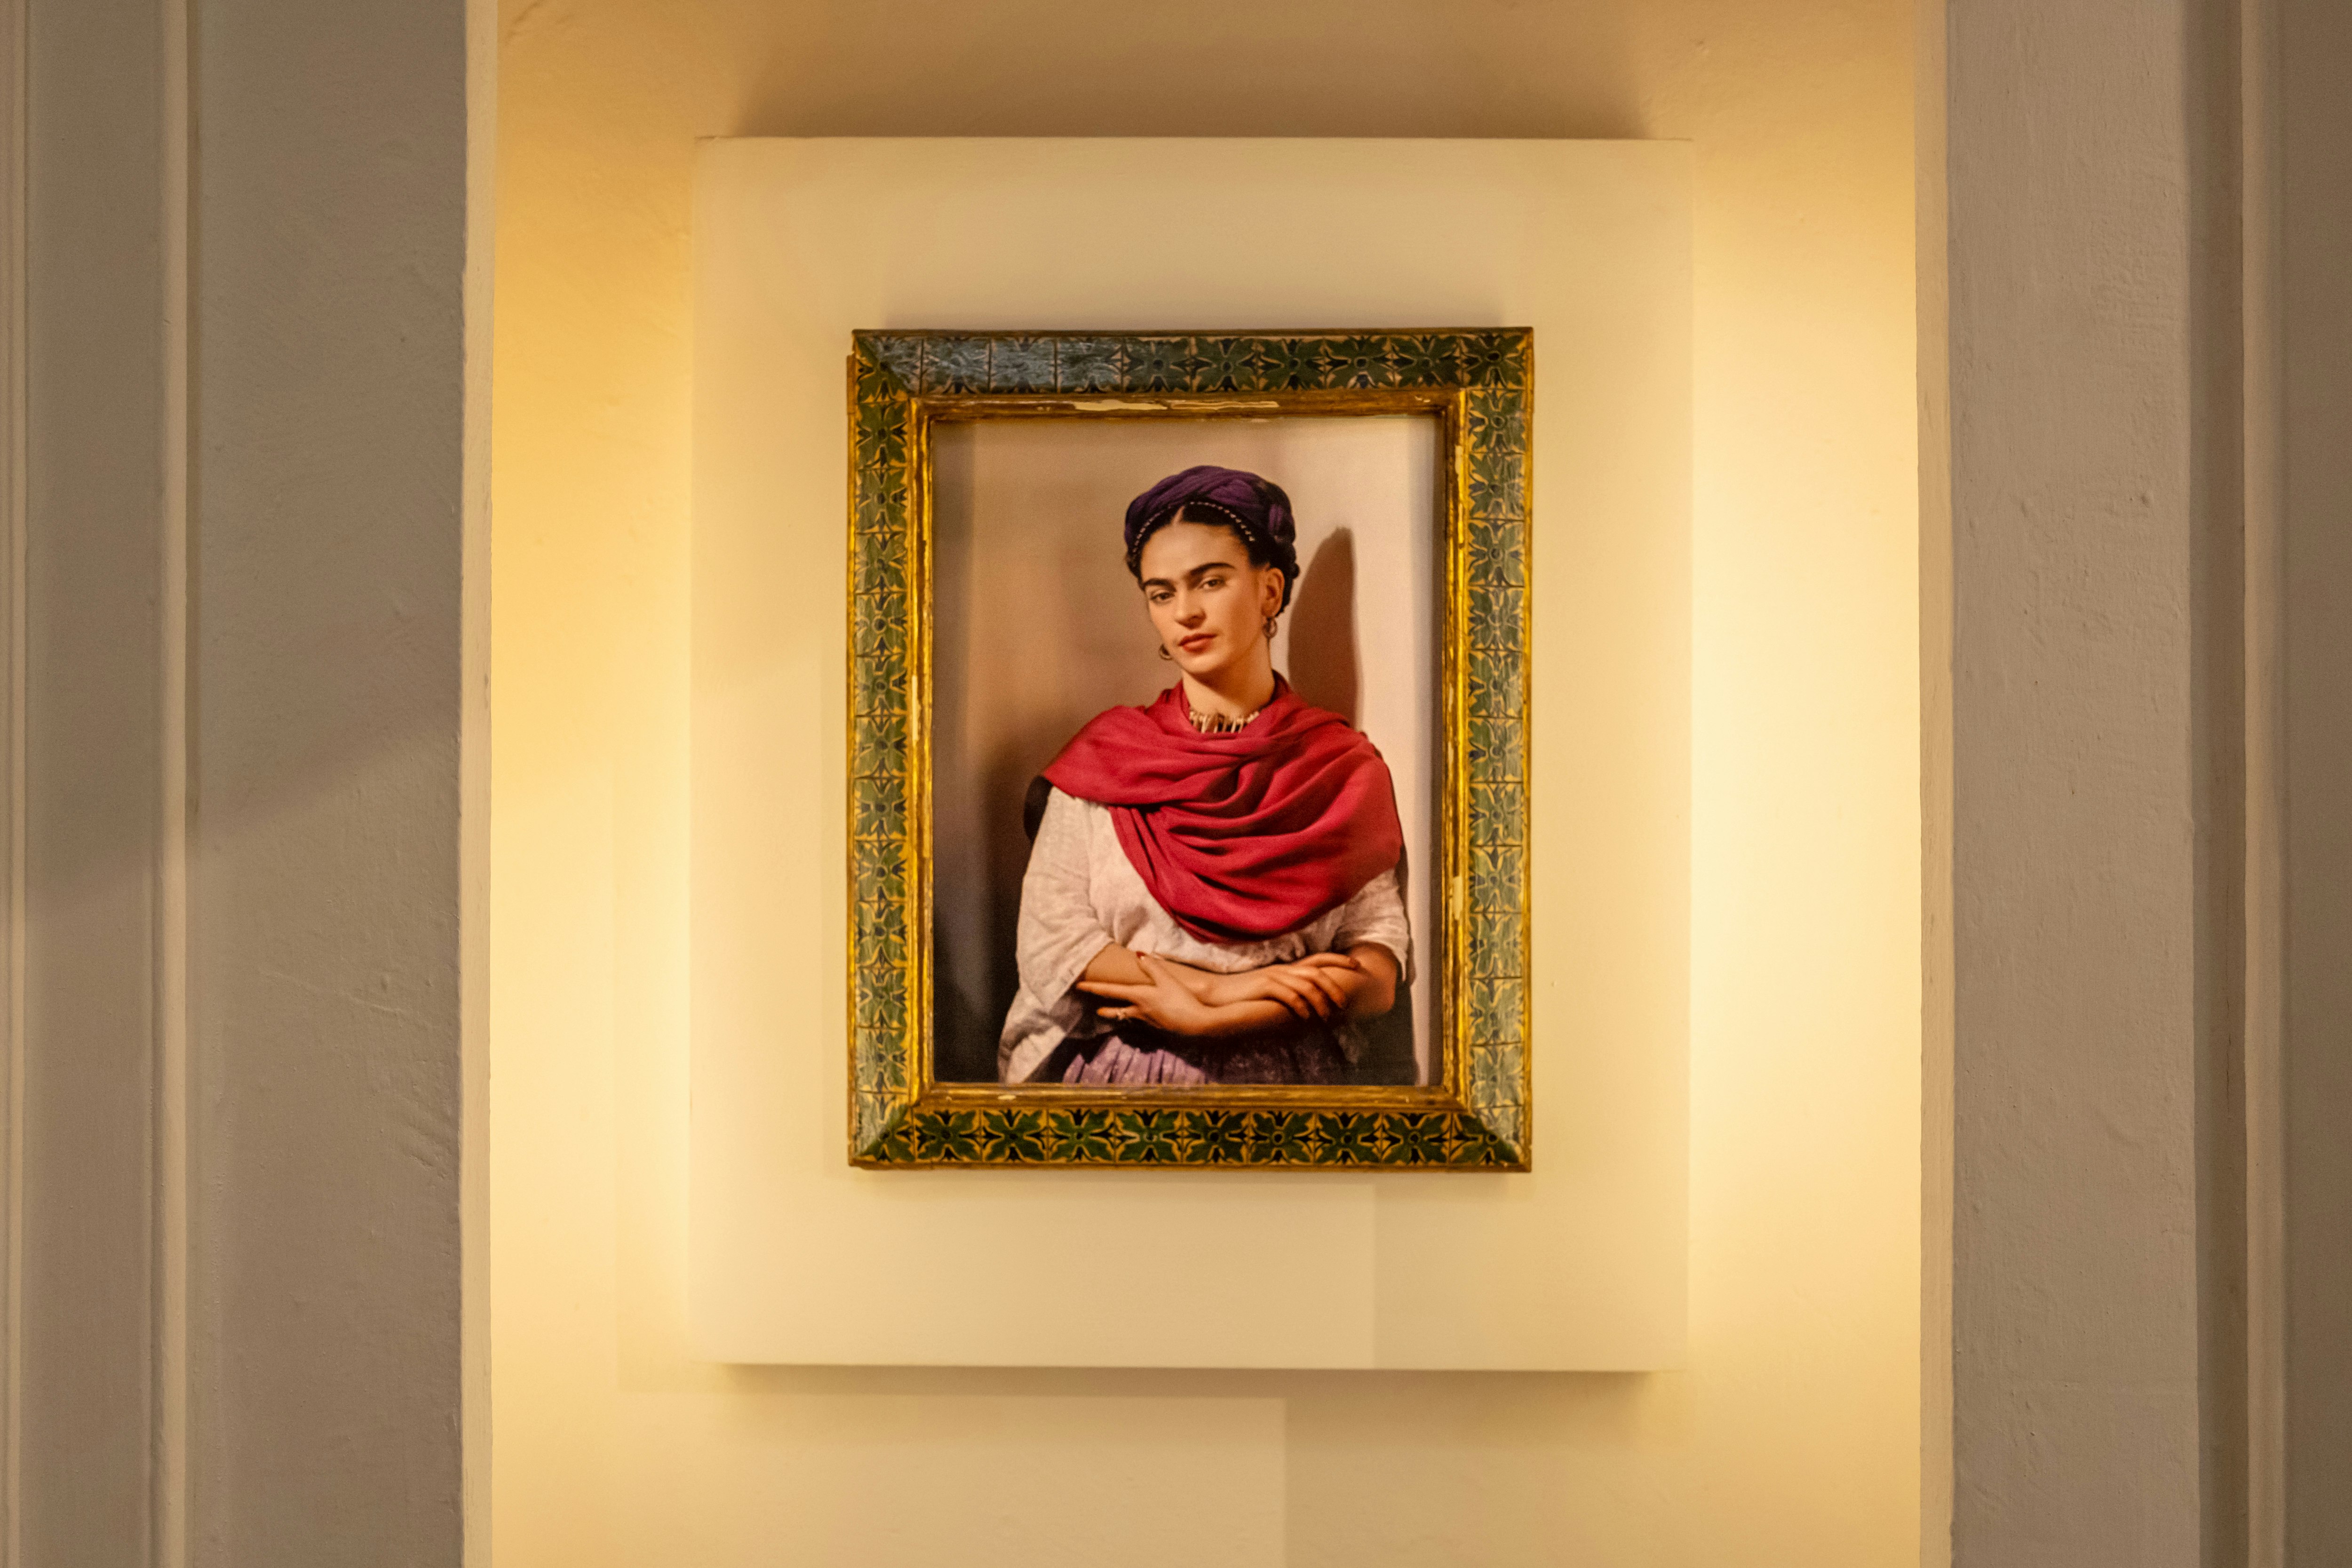 Frida Kahlo portrait on display in Casa Azul